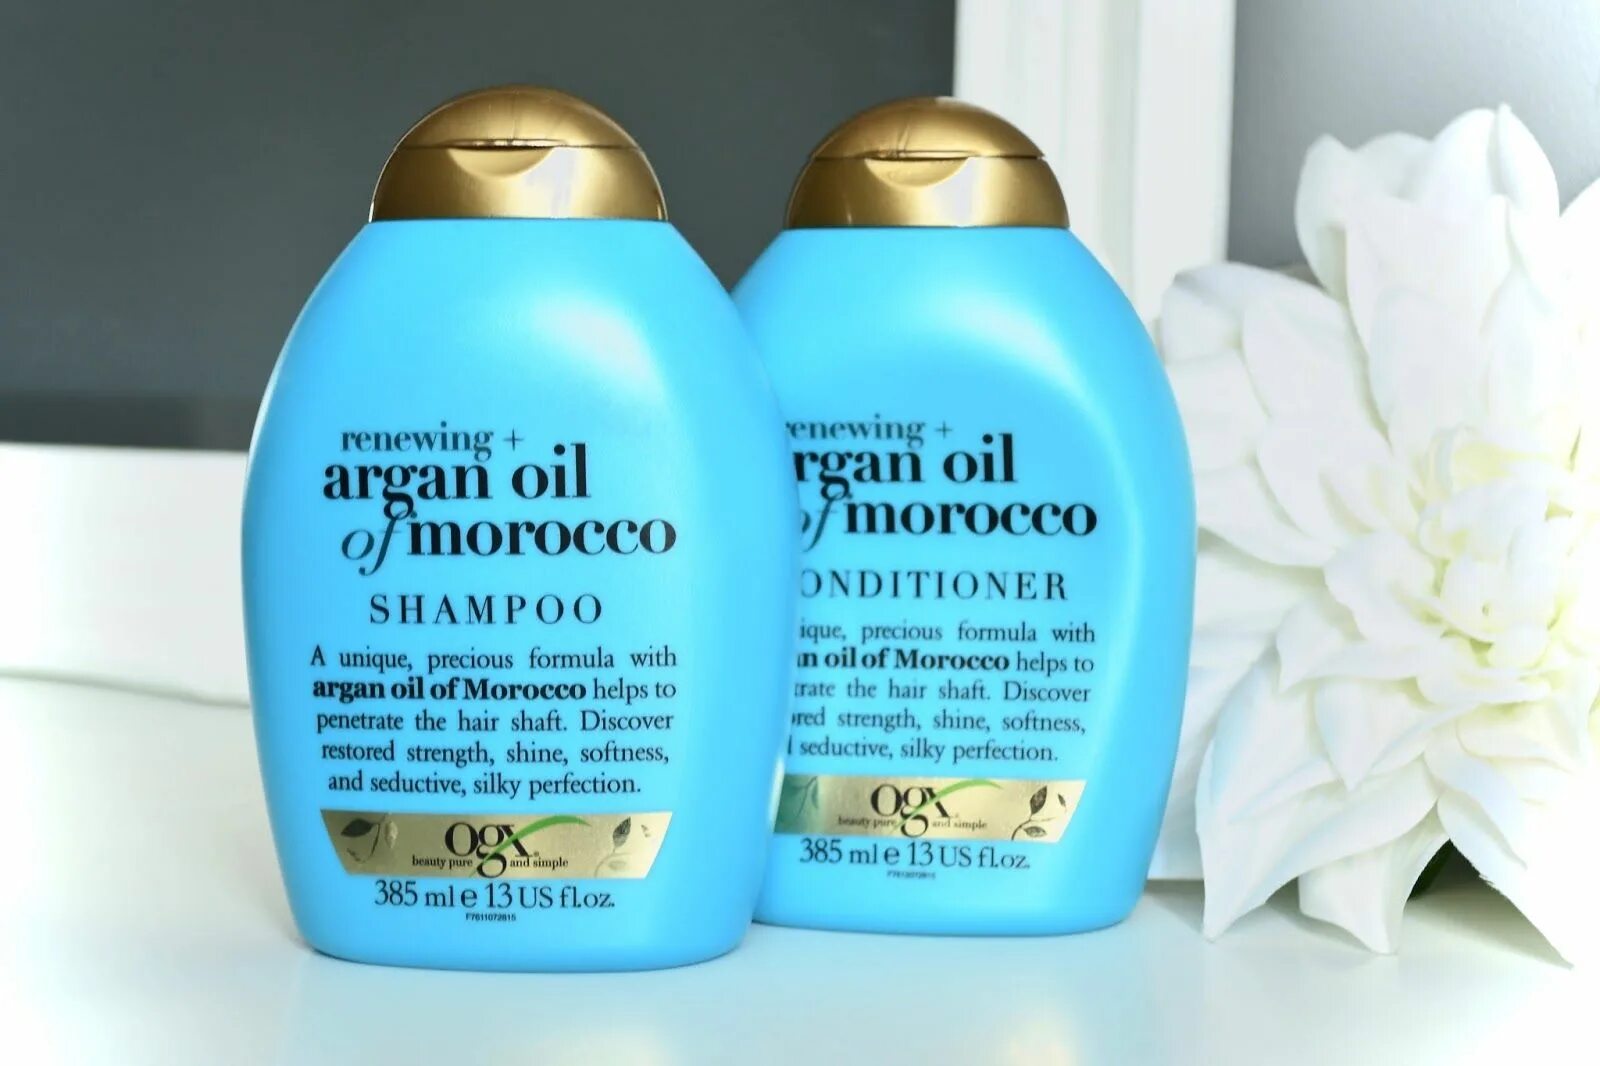 Ogx кондиционер. Шампунь OGX Argan Oil. Шампунь OGX Argan Oil of Morocco. Shampoo OGX шампунь "Argan Oil of Marocco Renewing+". OGX Moroccan Argan Oil.